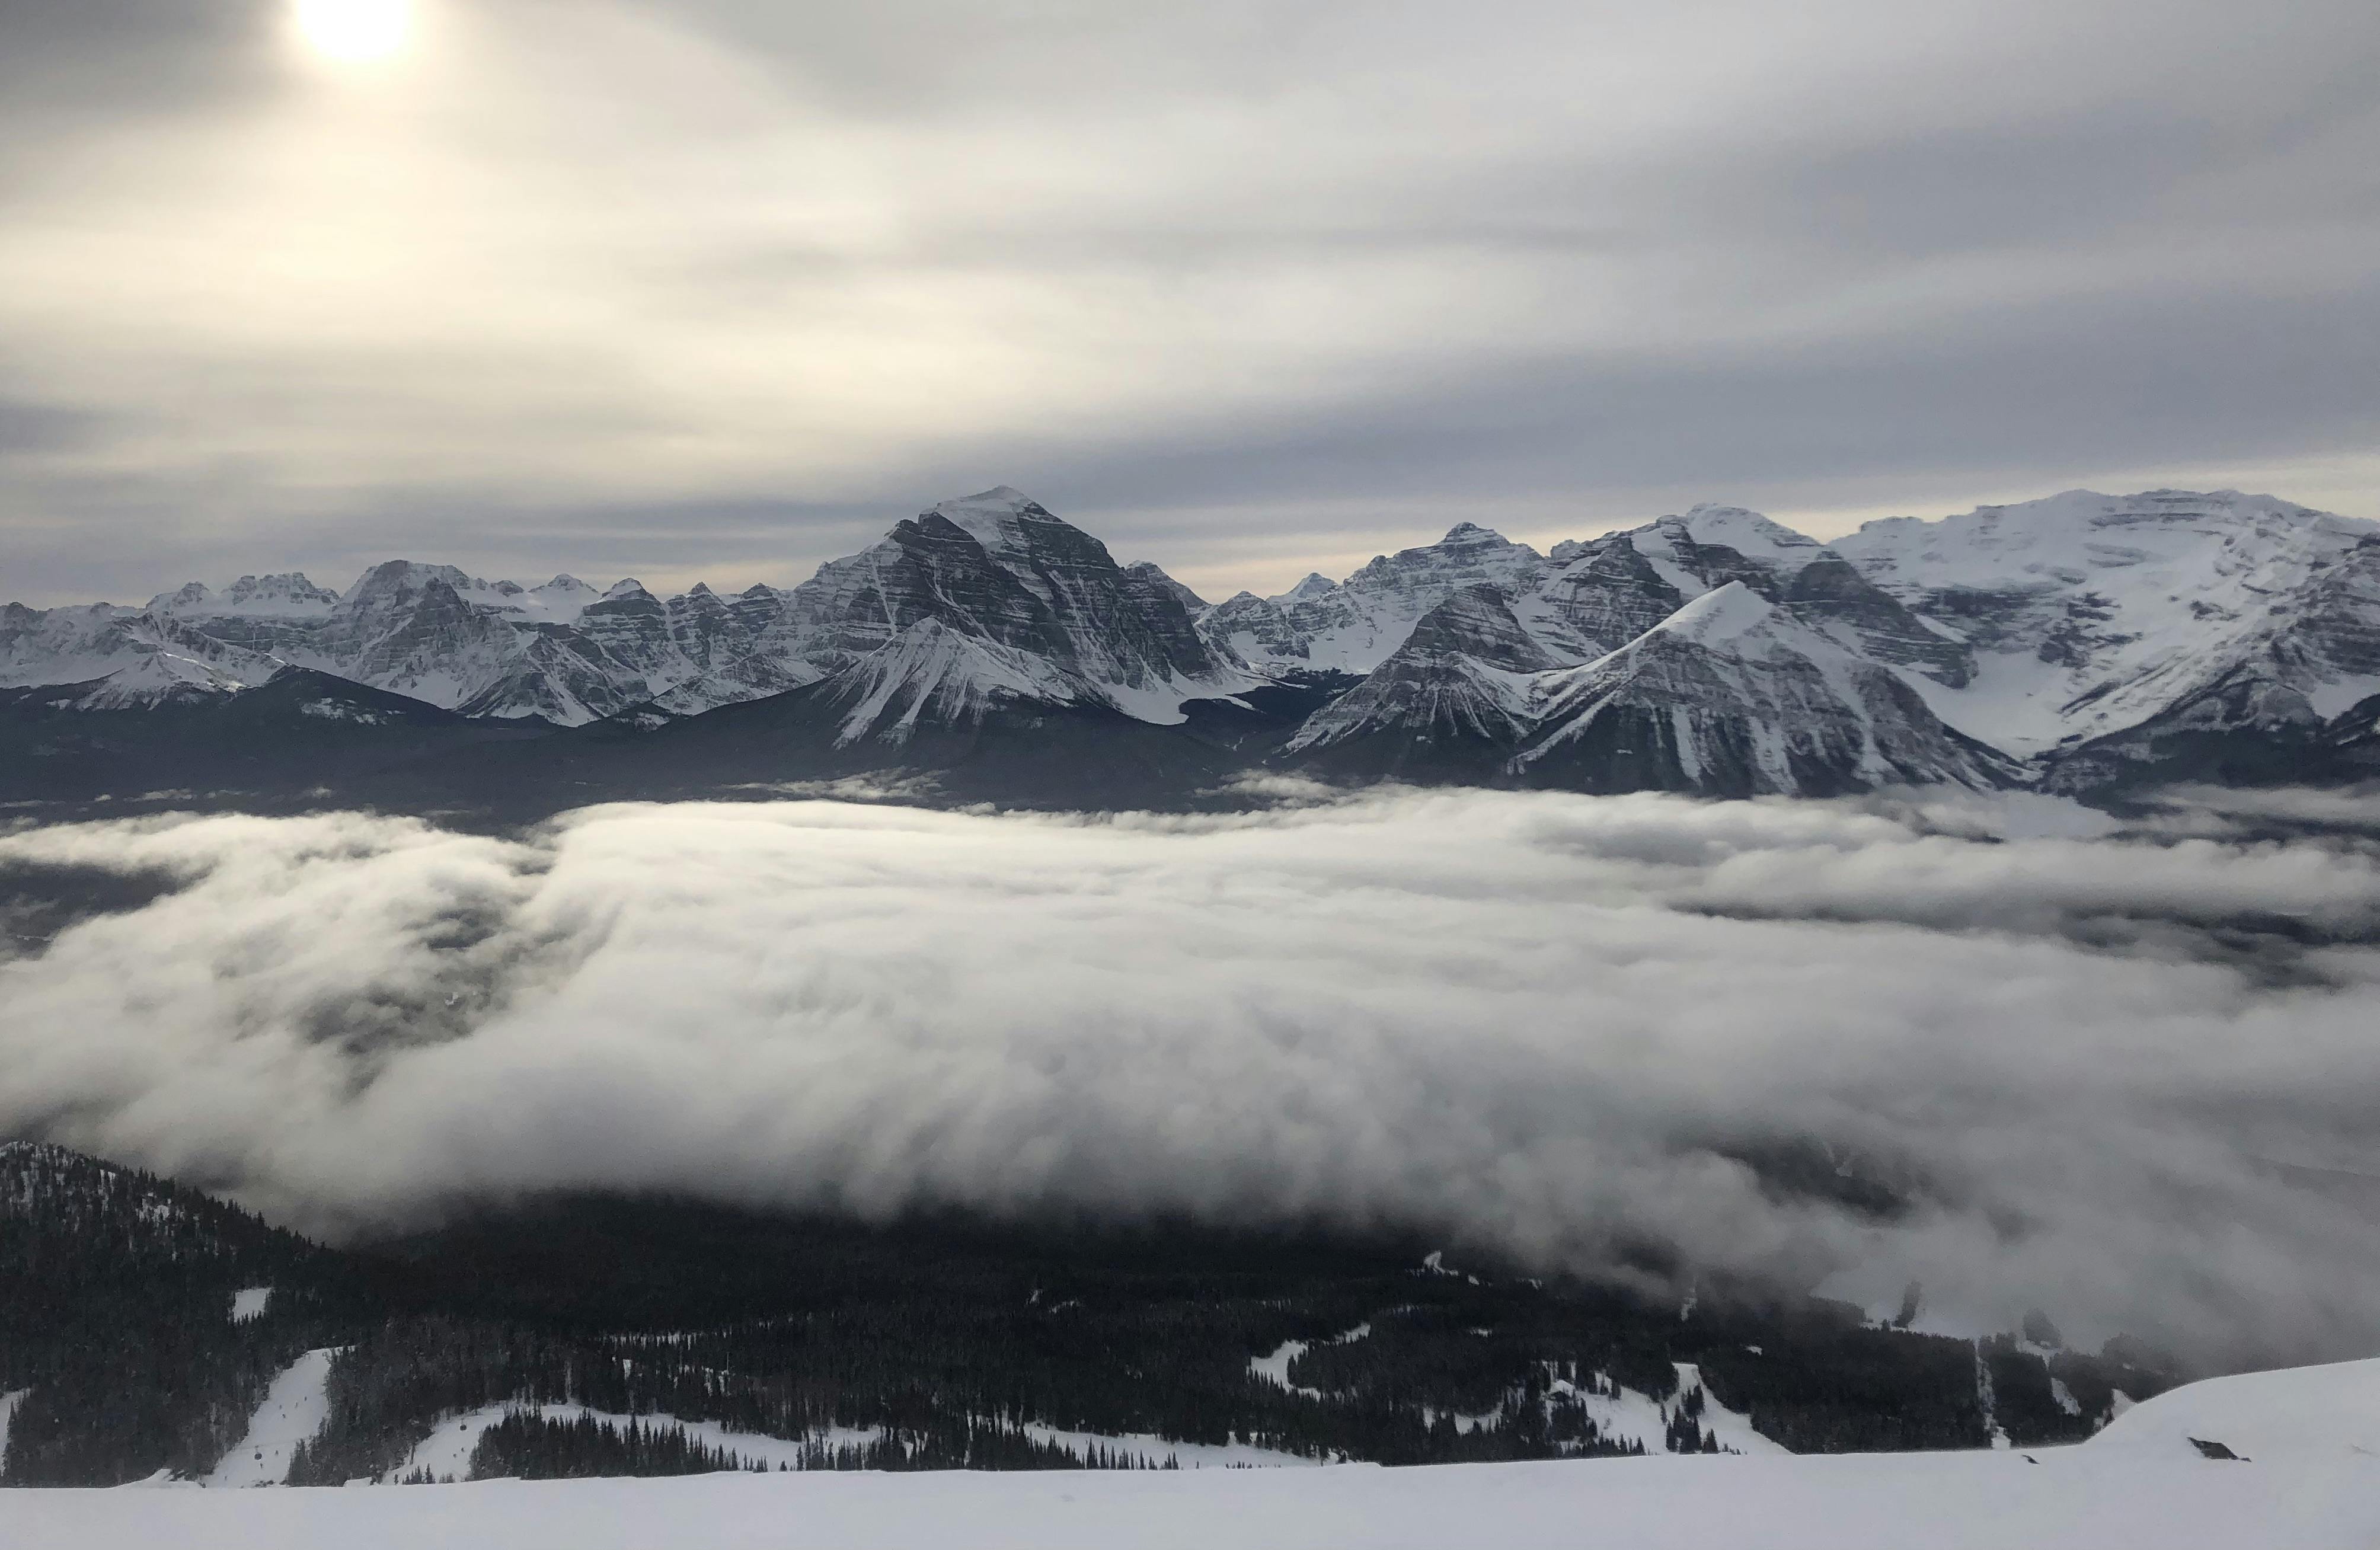 The peaks of Banff National Park viewed from Lake Louise Ski Resort.